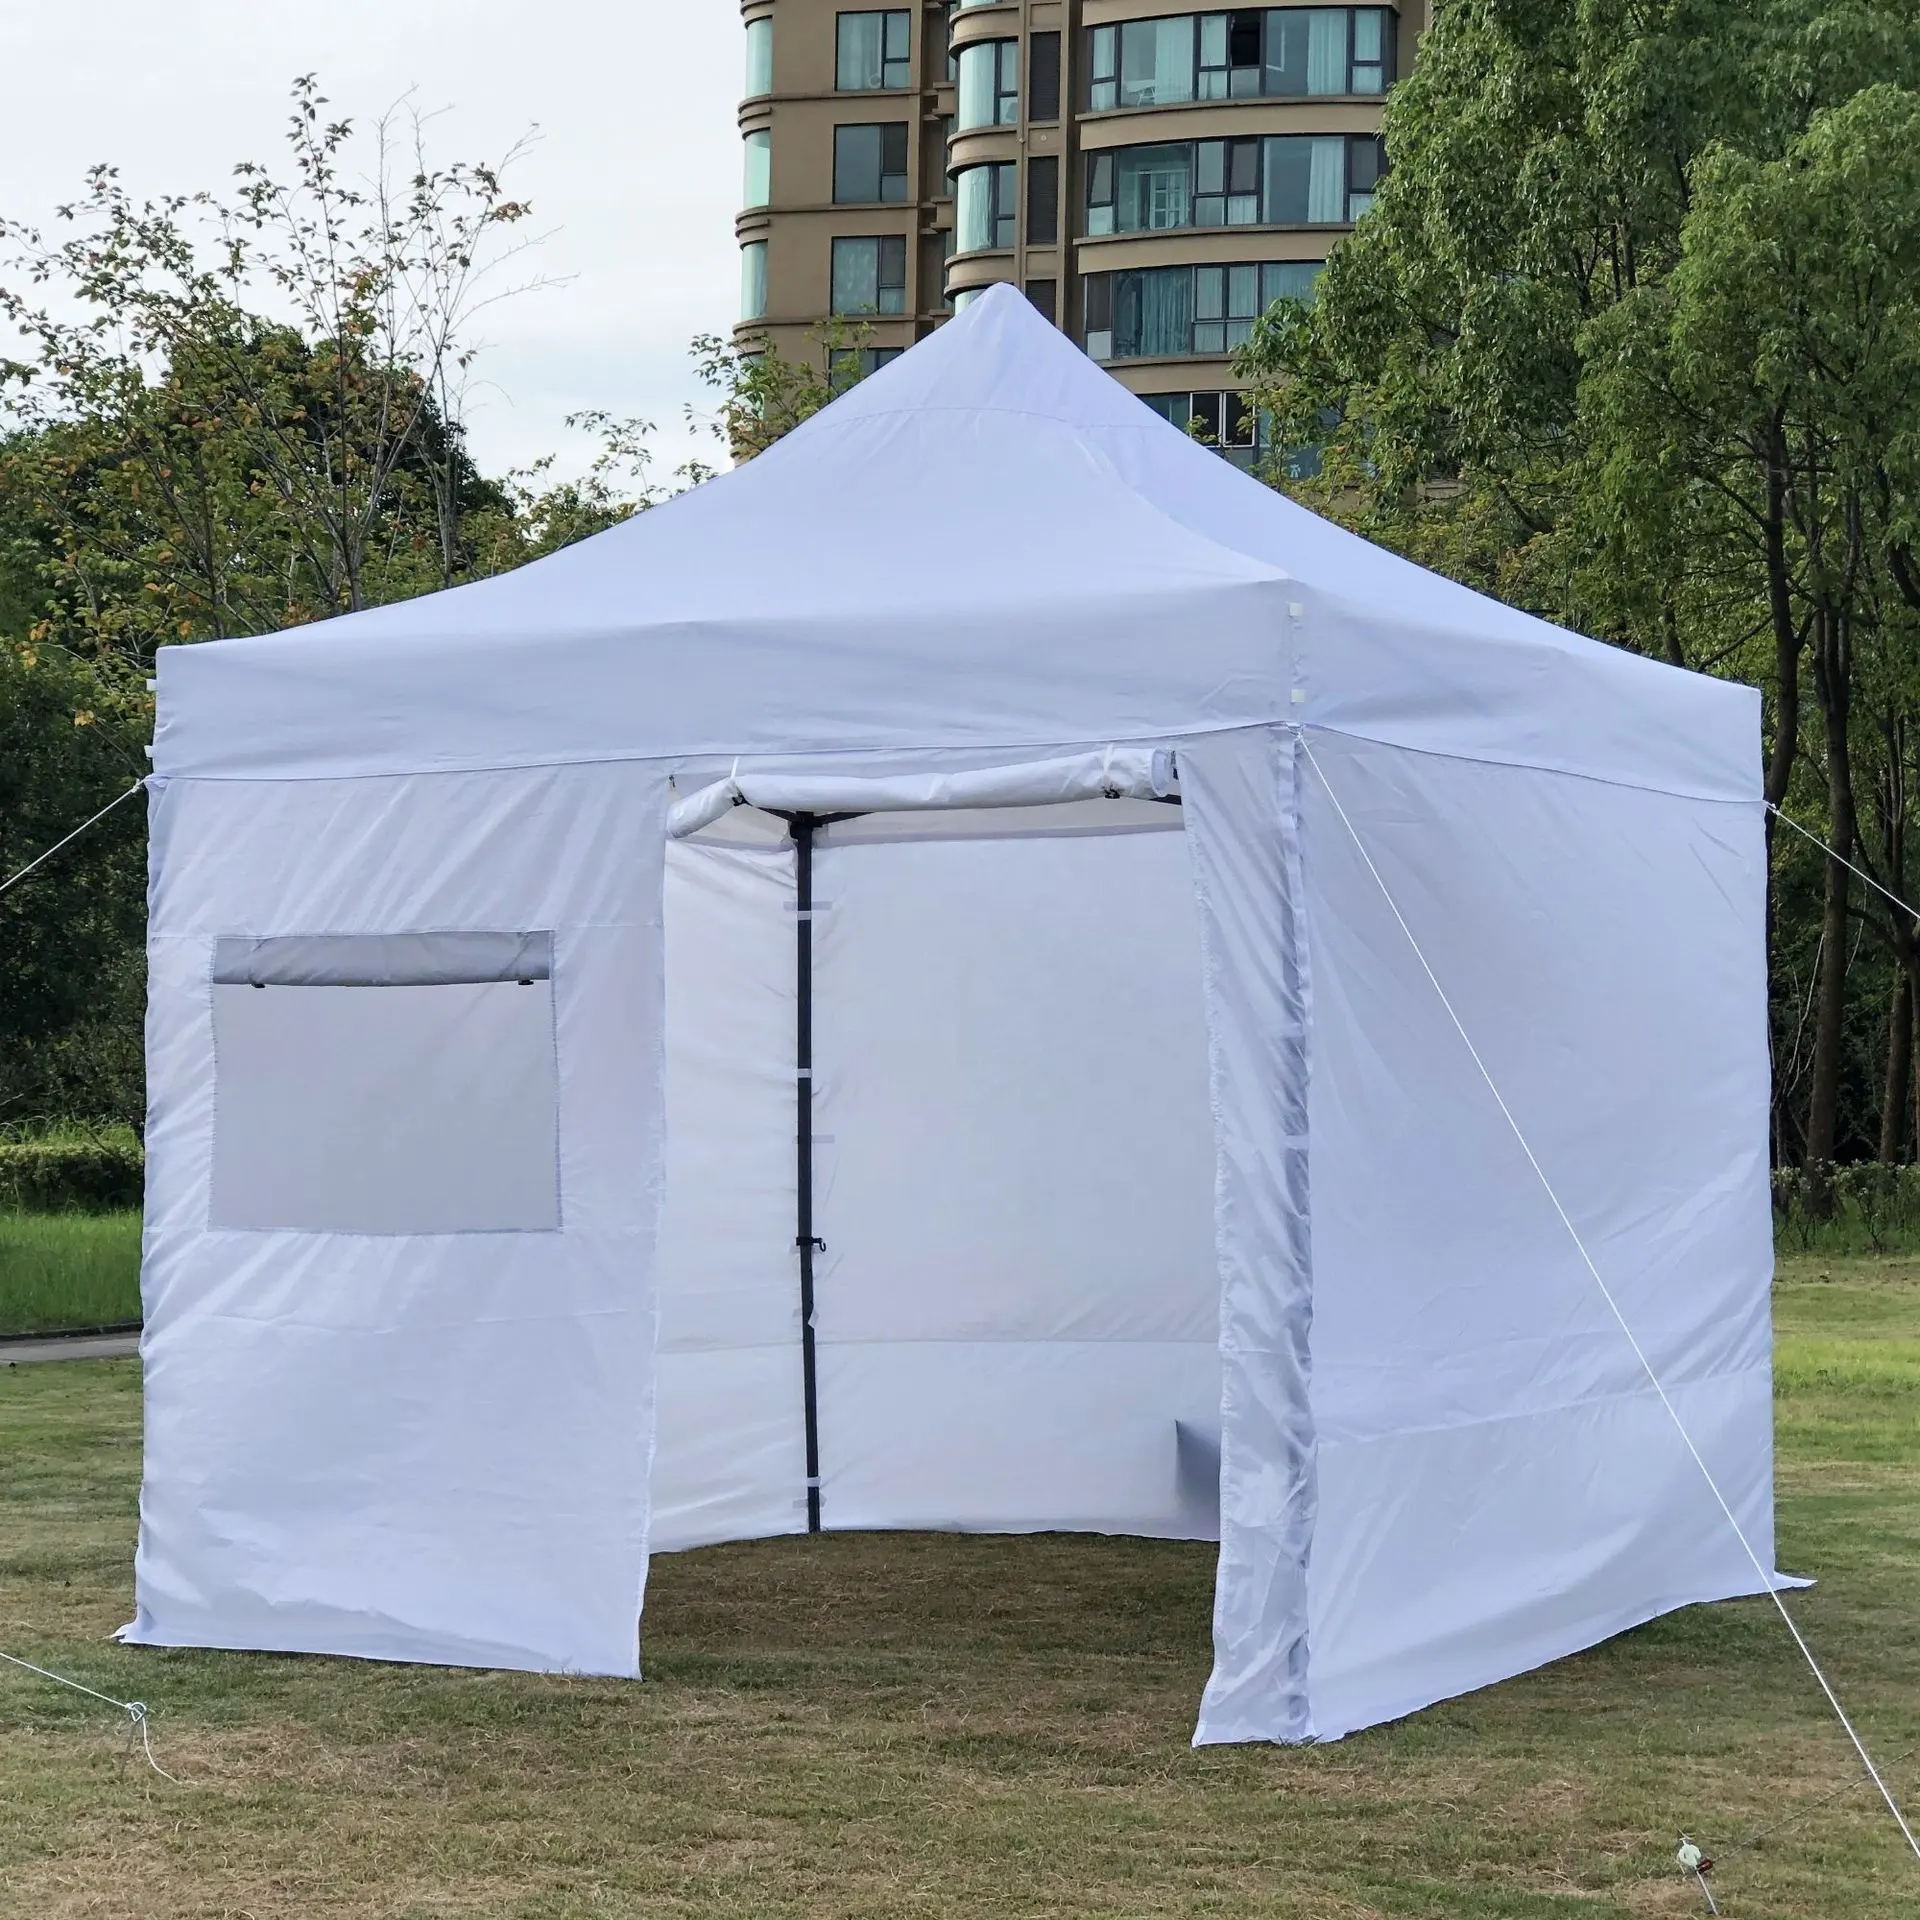 Tenda komersial 3x3, tenda Gazebo kanopi Pop Up besar Sidewall untuk pemasaran pameran dagang dengan sisi